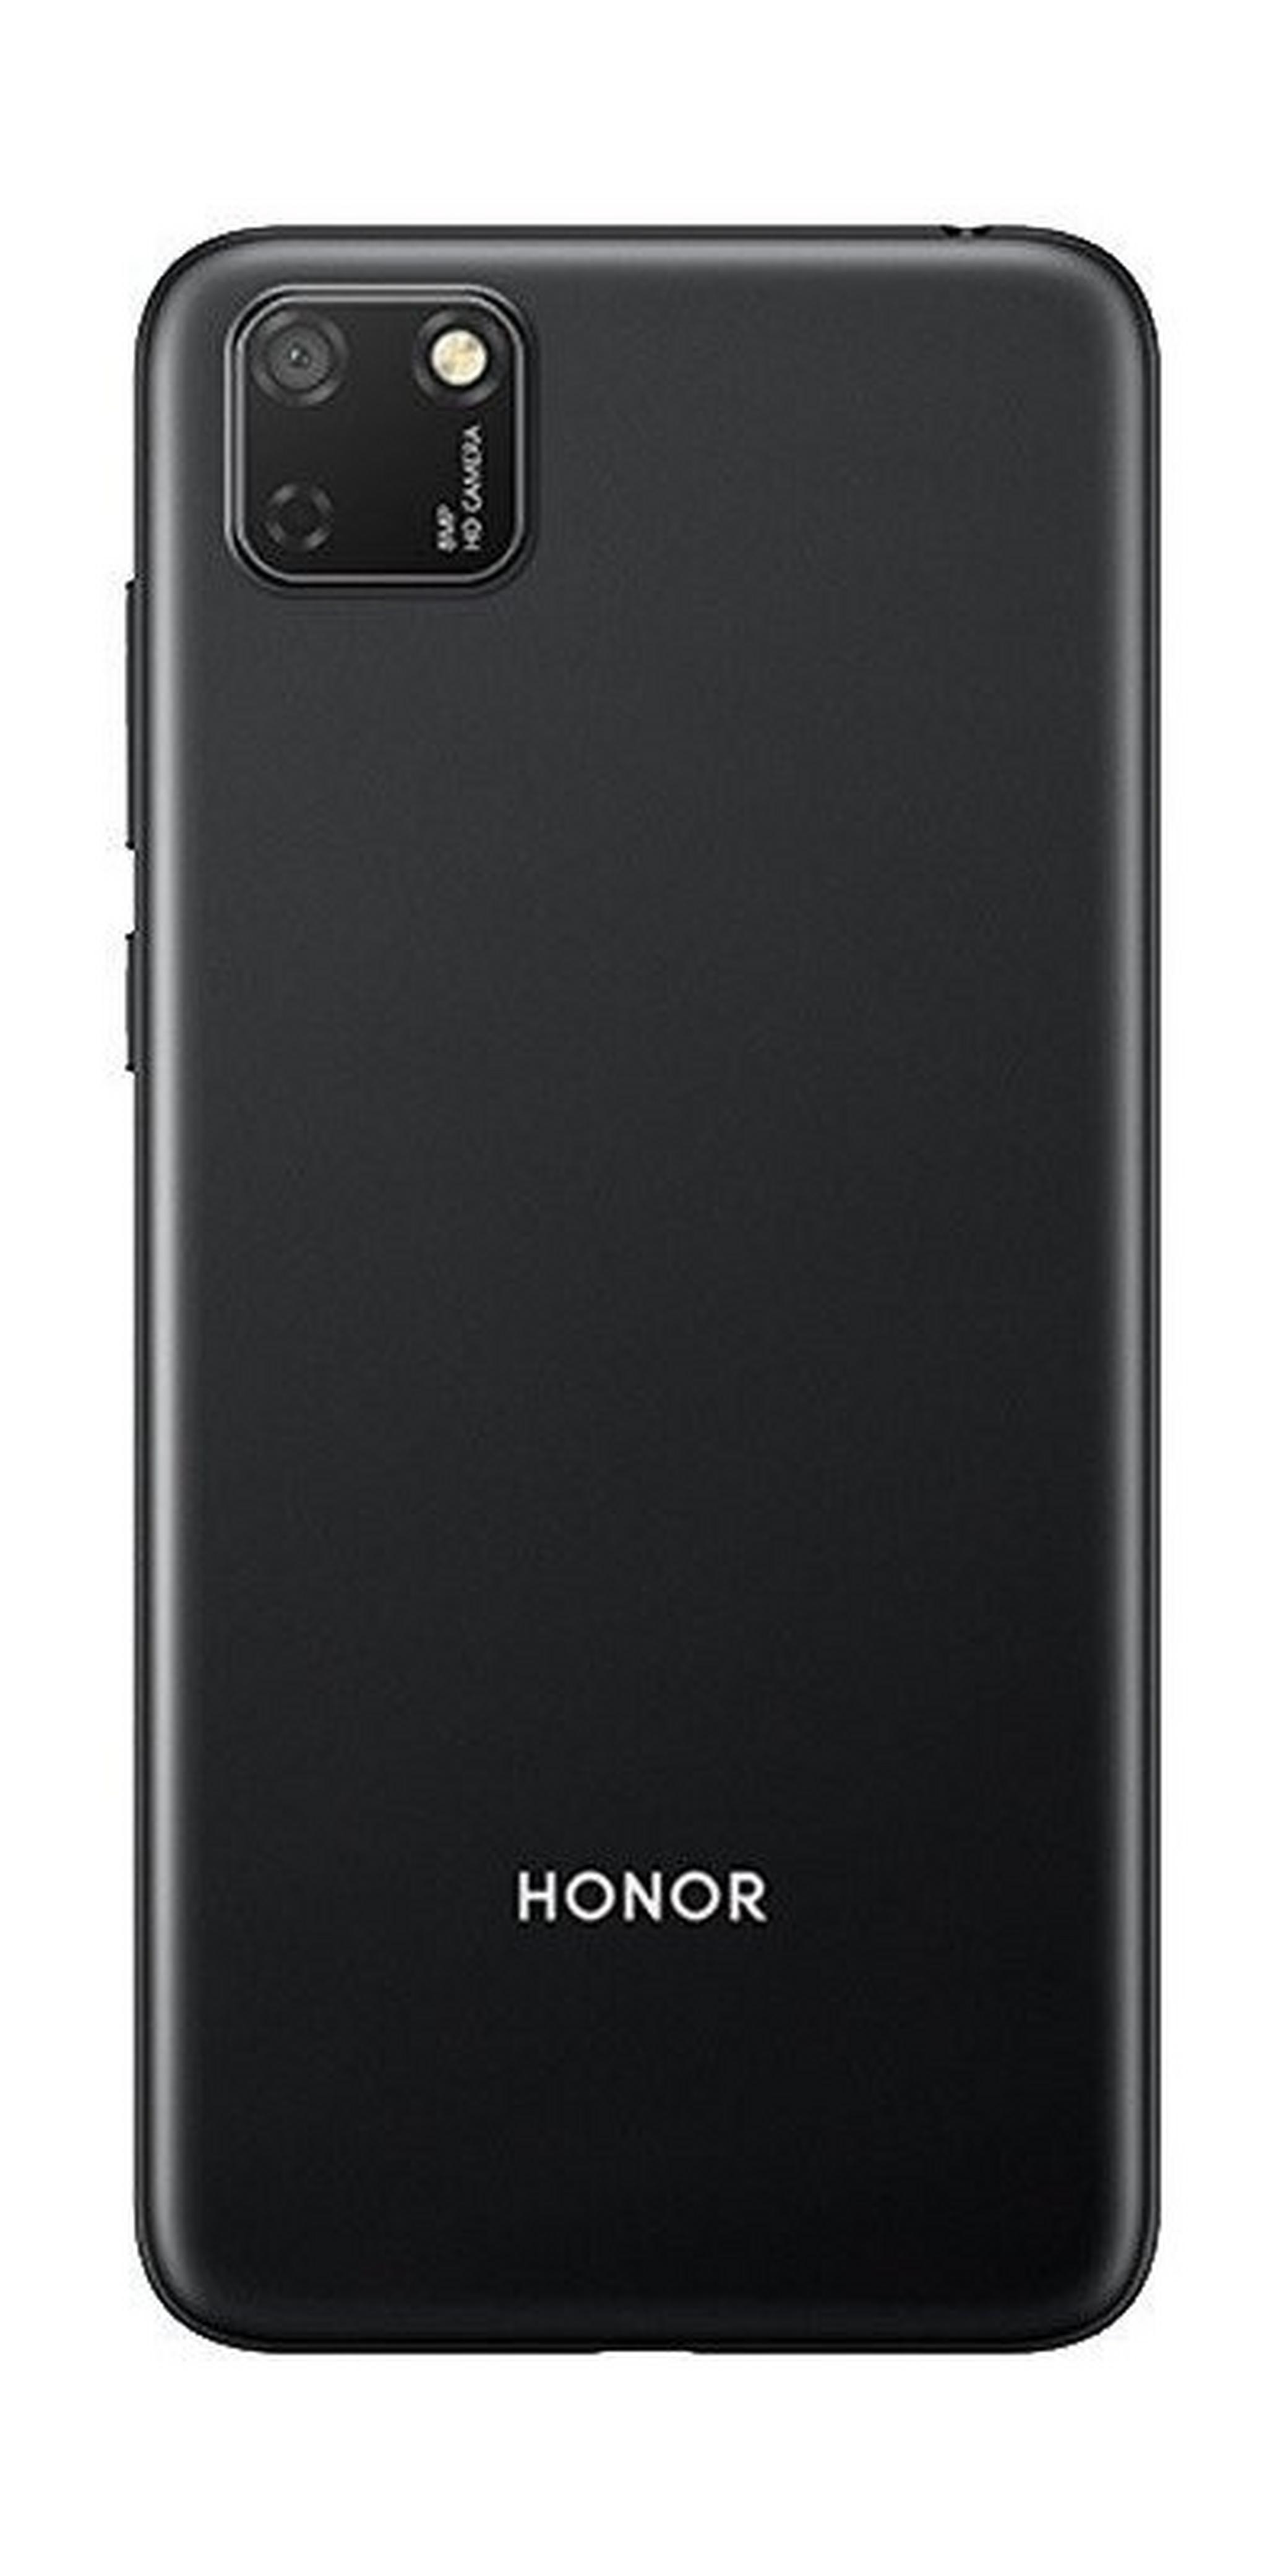 Honor 9S 32GB Phone - Black